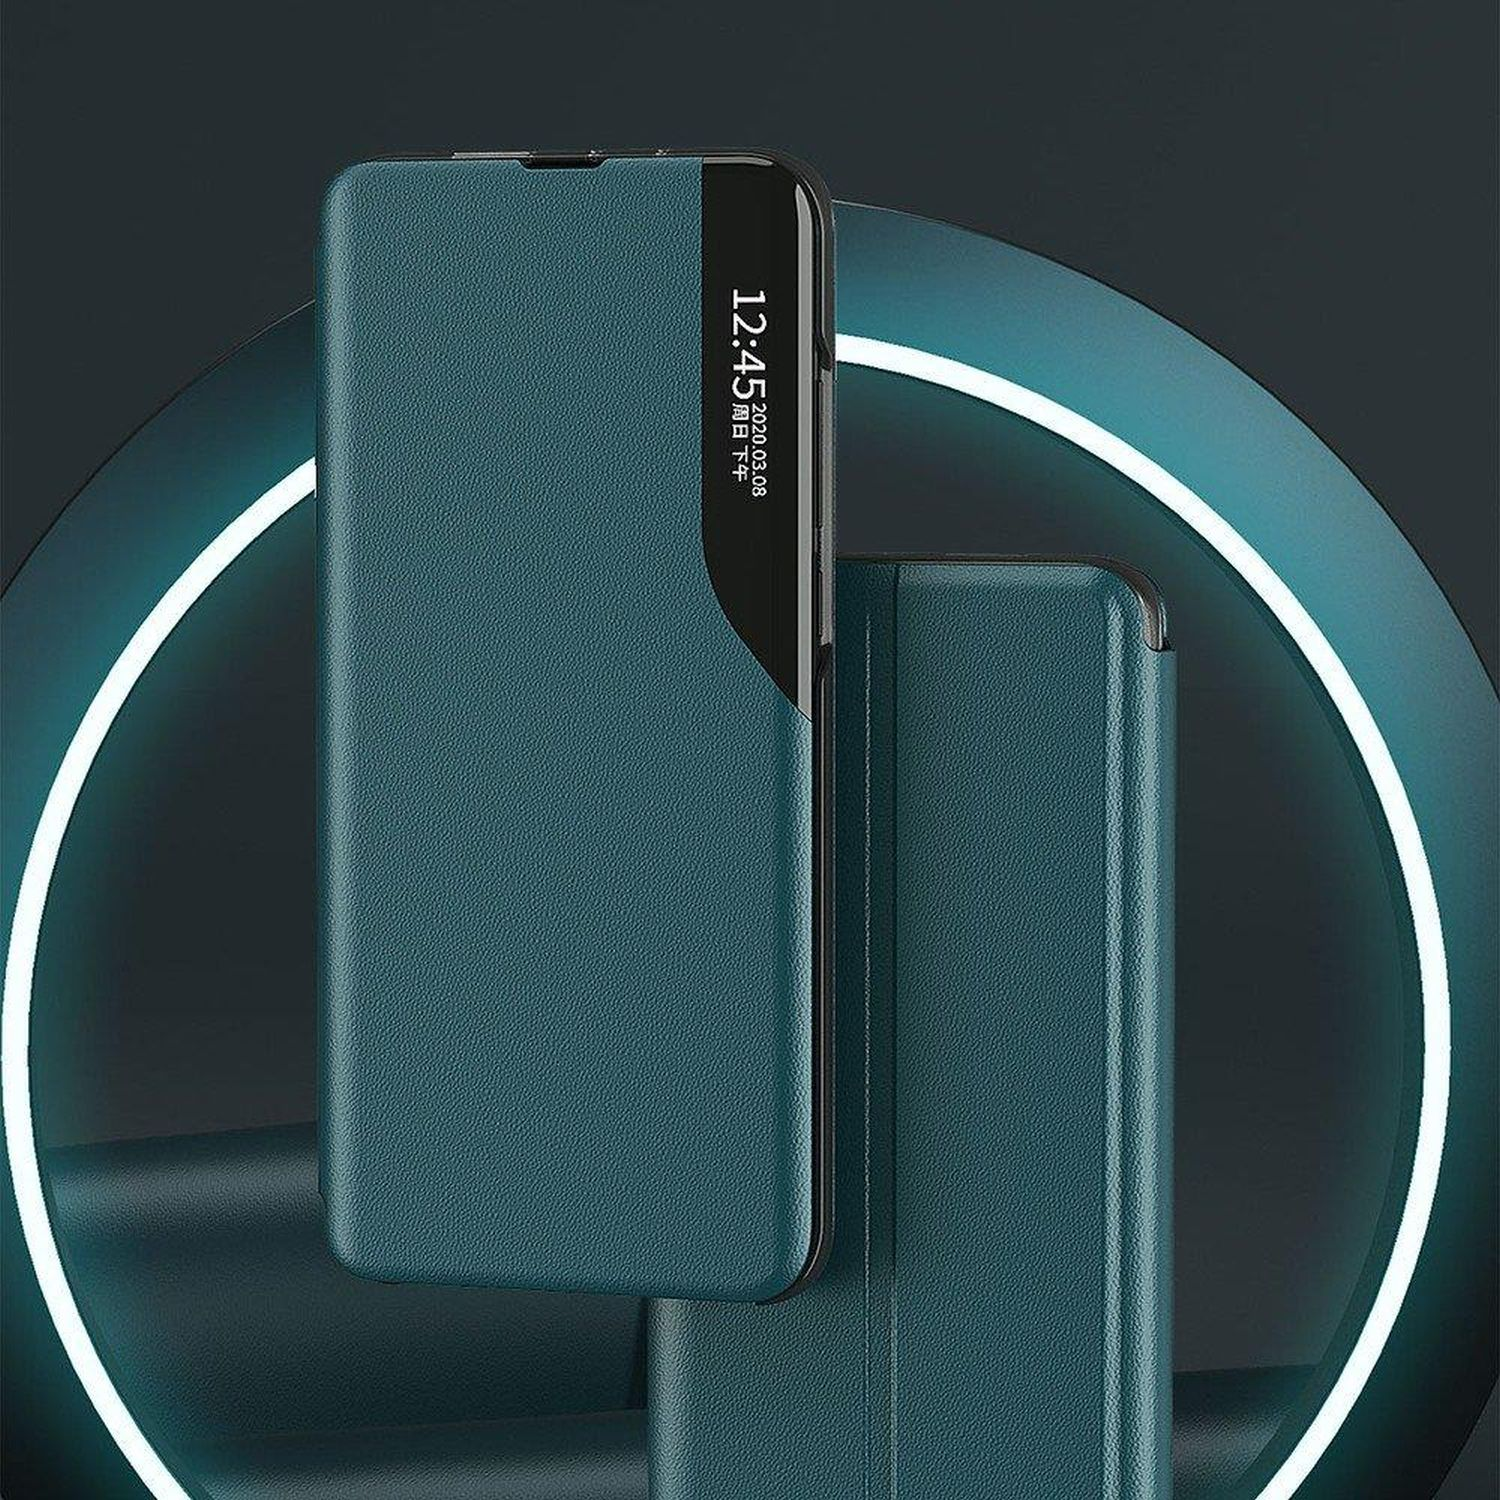 Case, Y5P, Huawei, View Grün Smart COFI Bookcover,